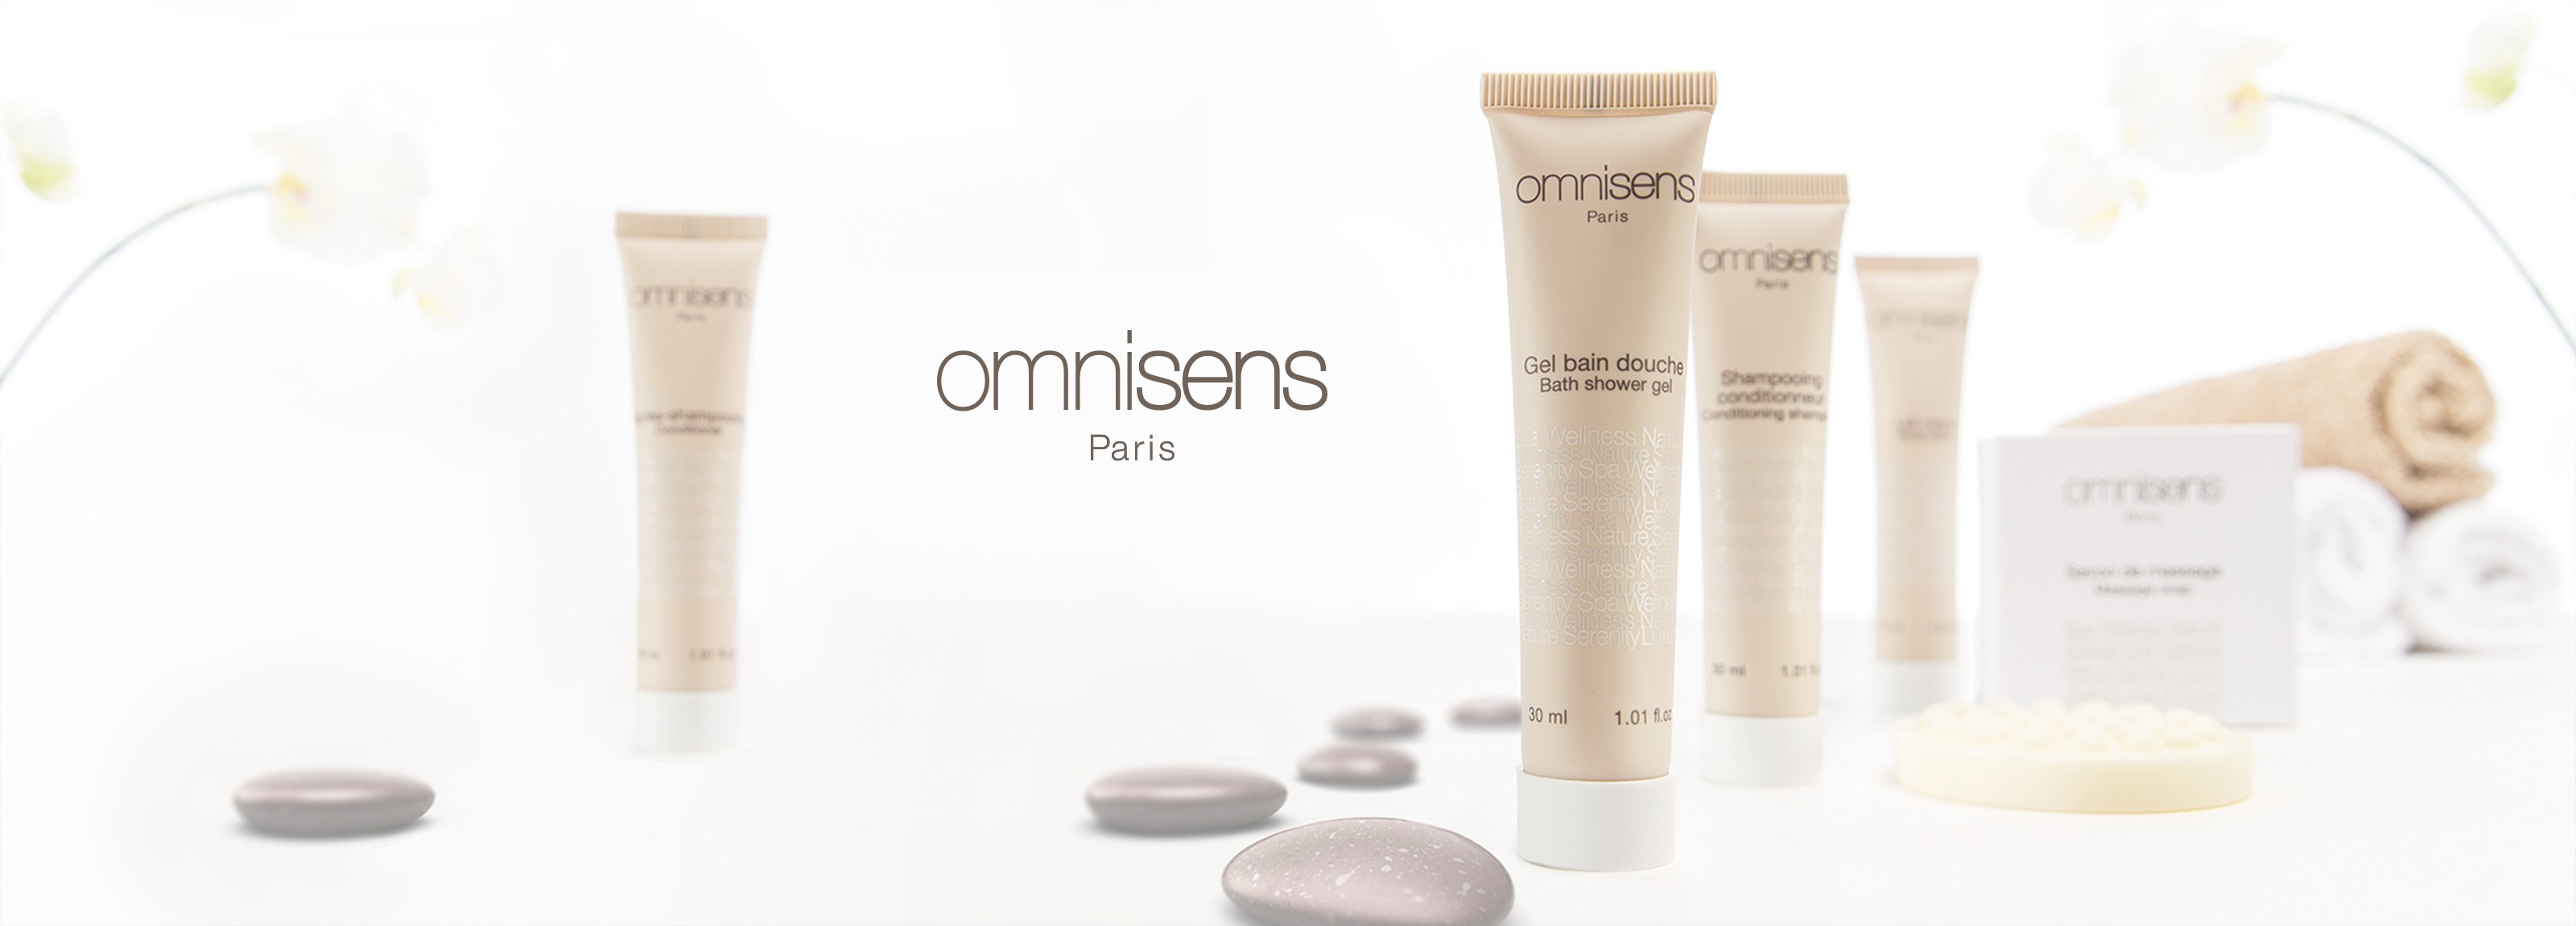 omnisens paris bathroom products and pebbles